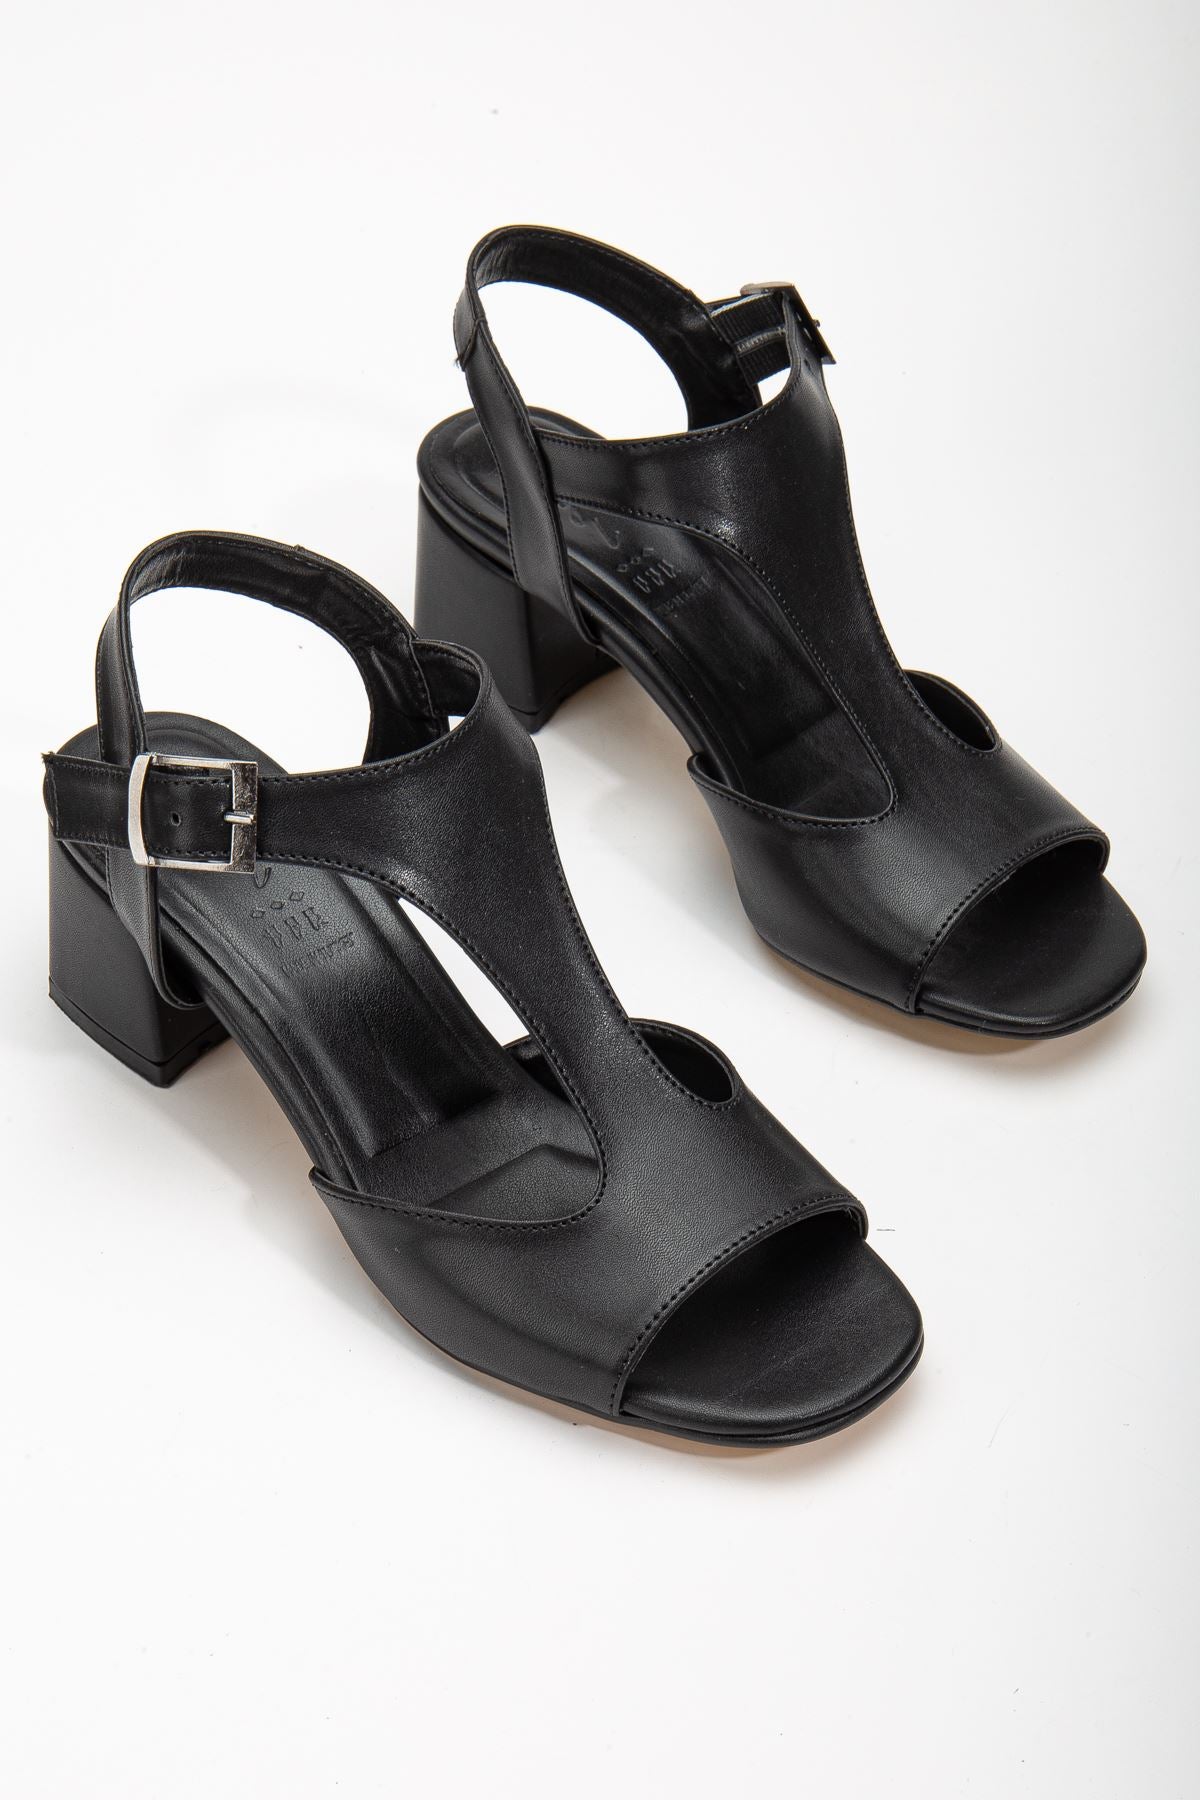 Charly Black Skin Blunt Toe Heeled Women's Shoes - STREETMODE™